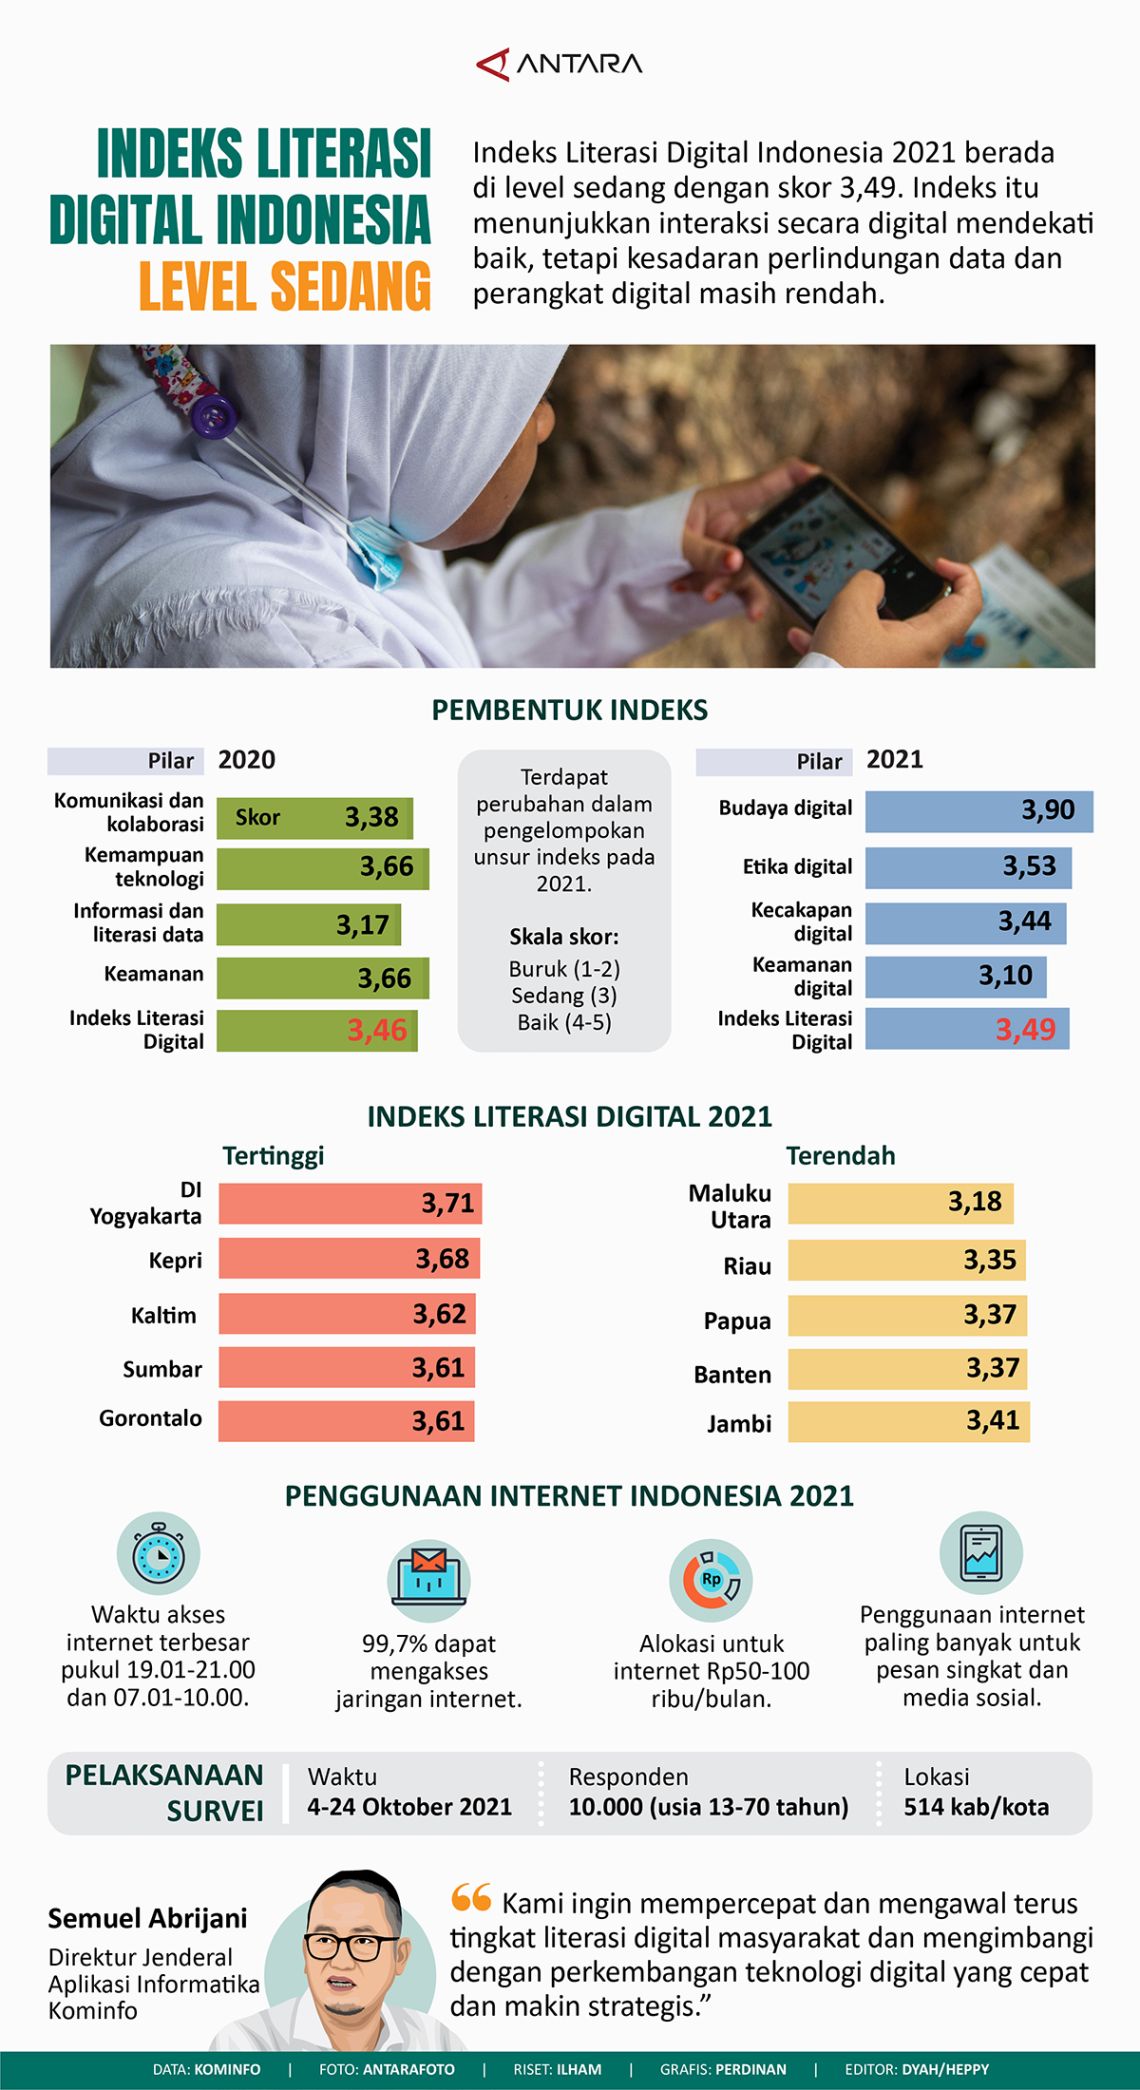 Indeks literasi digital Indonesia level sedang